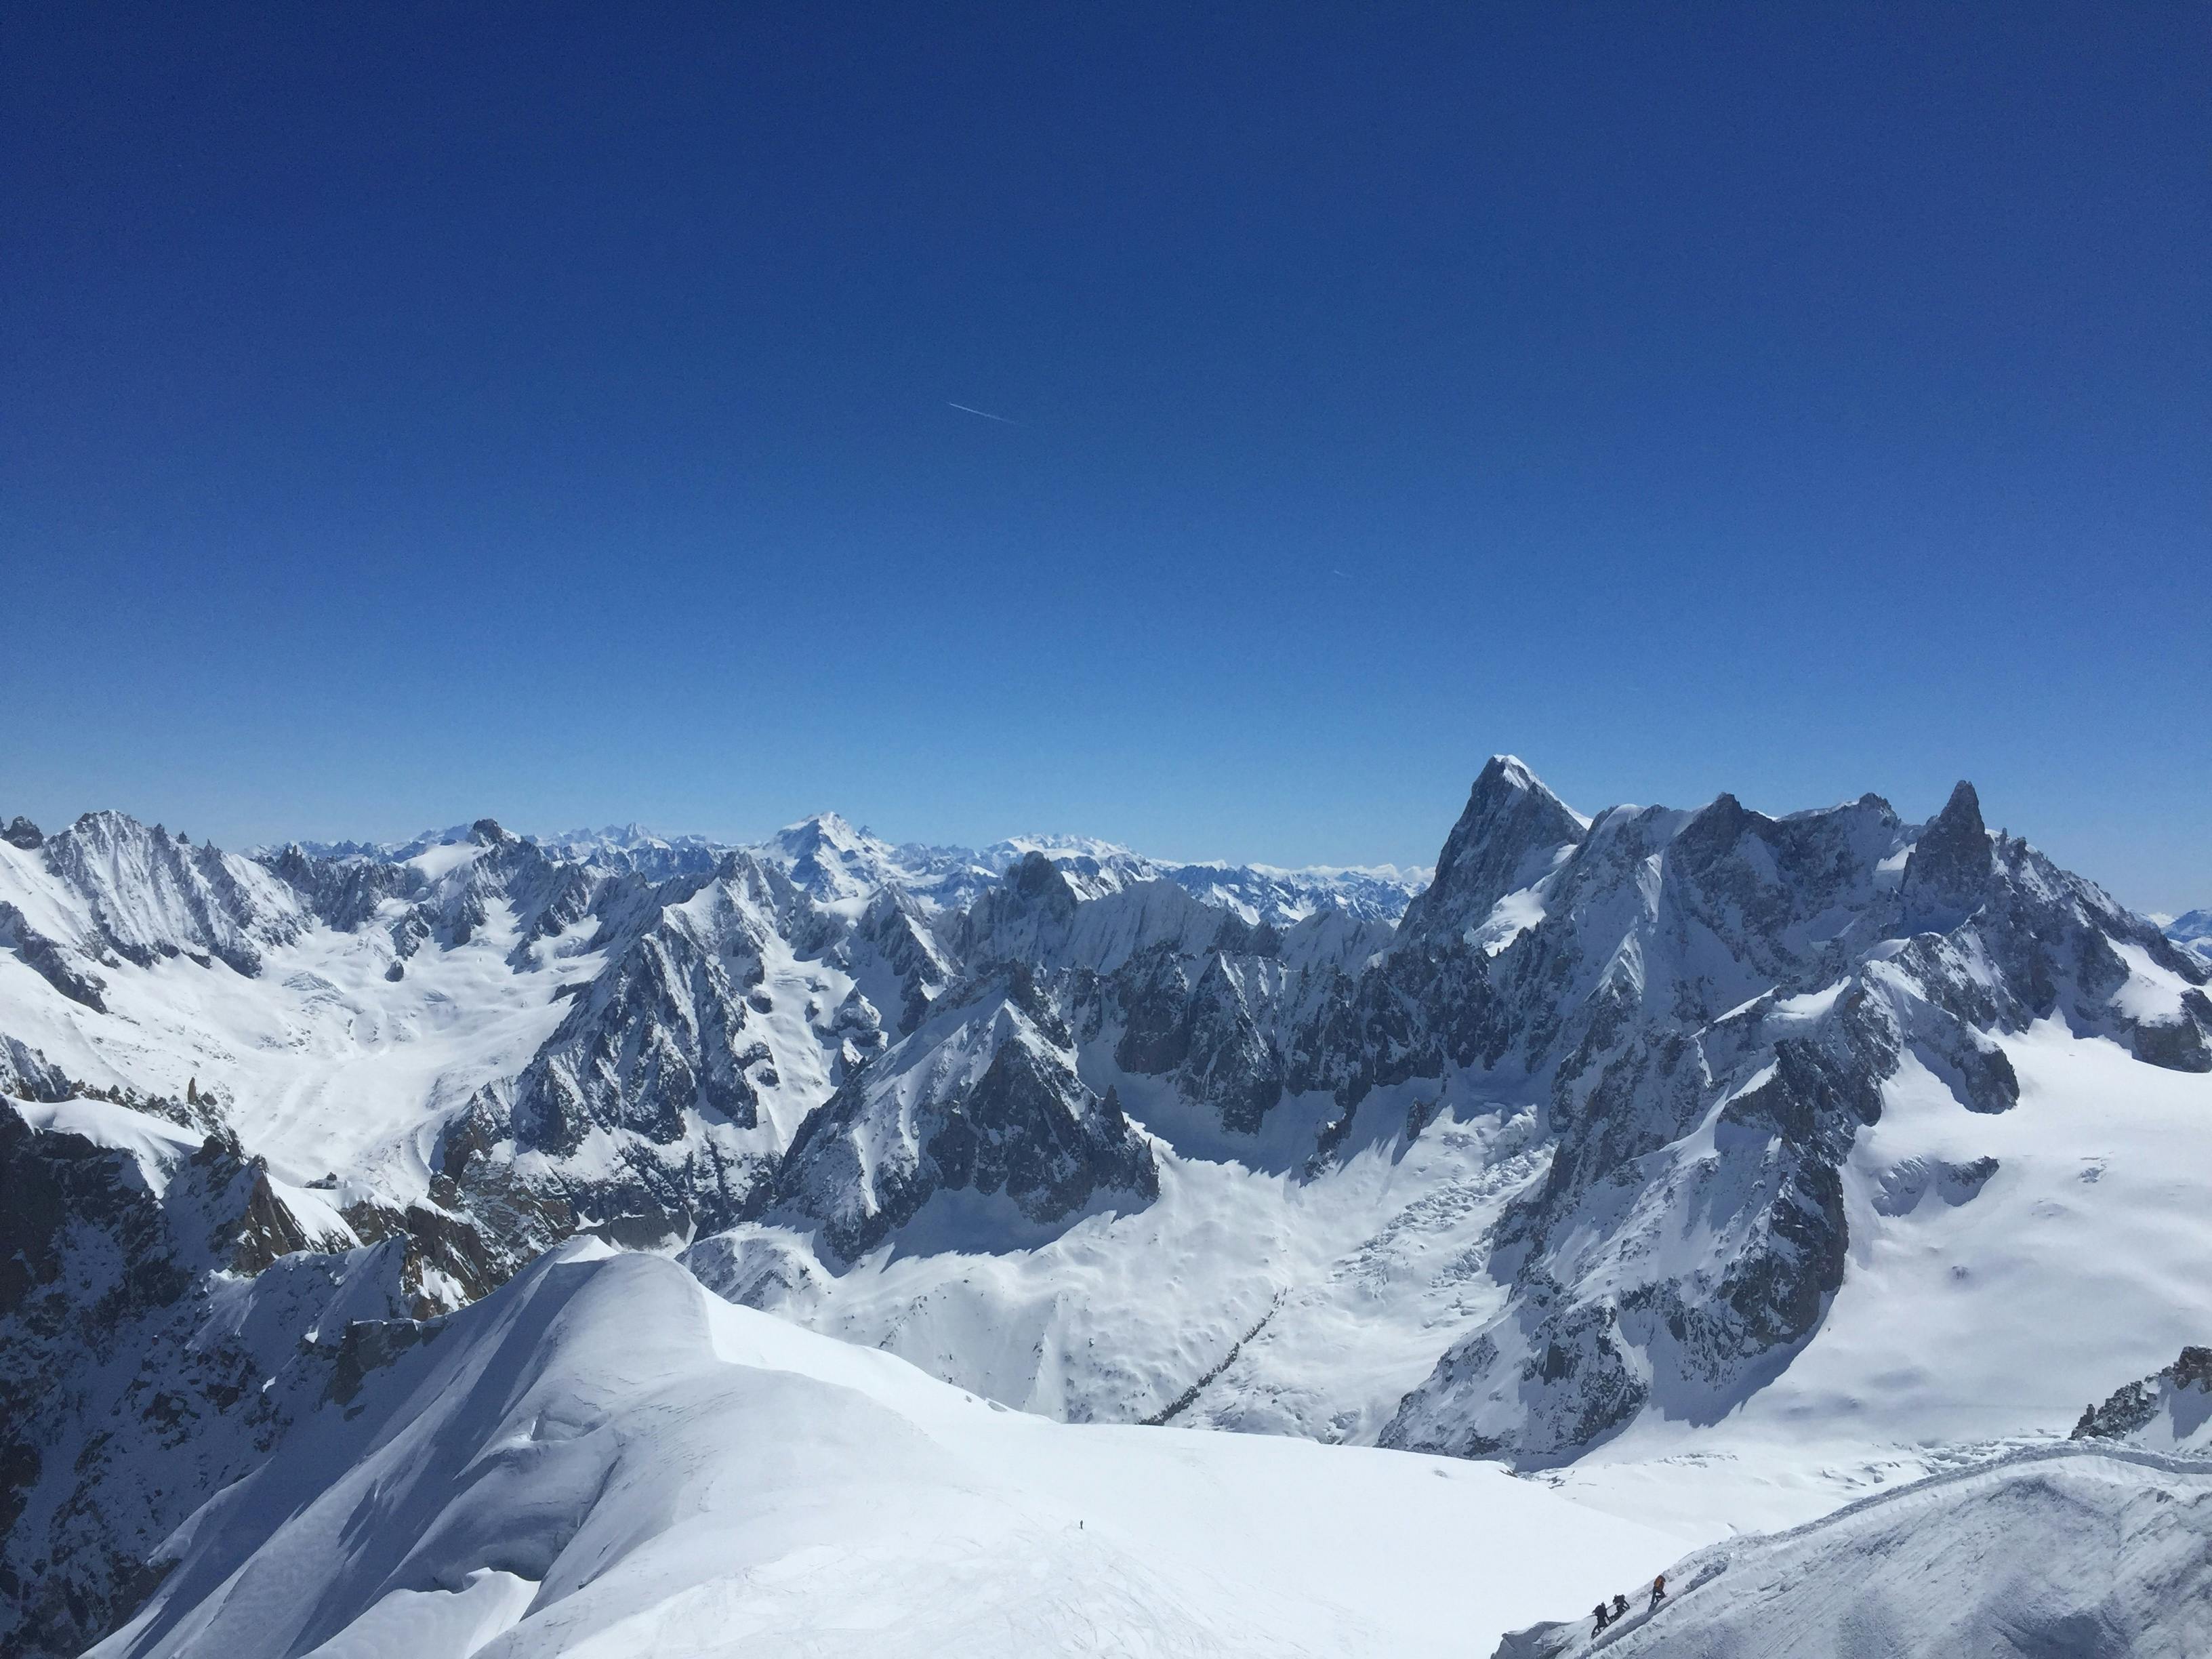 Free stock photo of Chamonix Mont Blanc